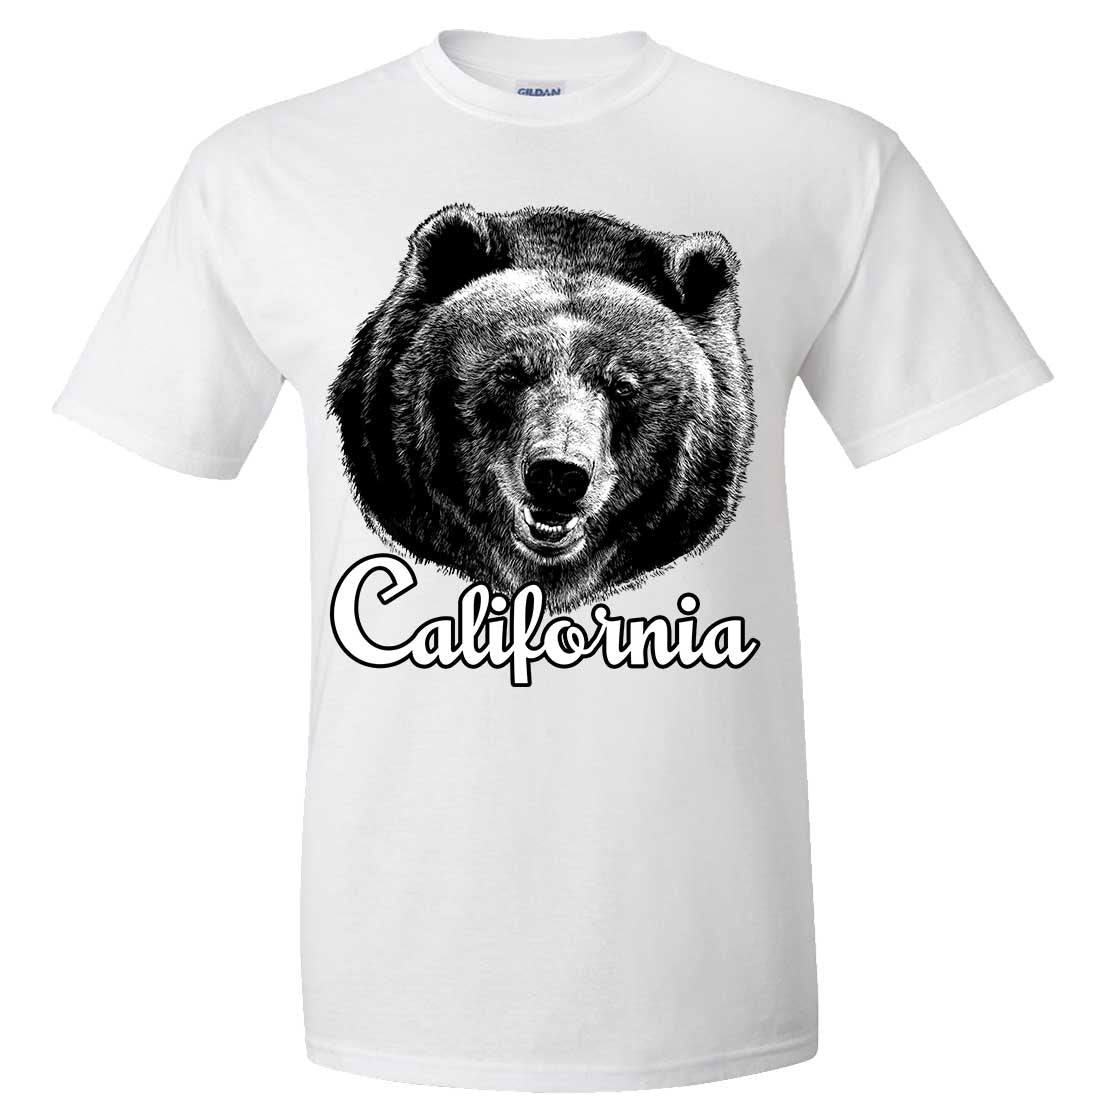 Cal Bears Apparel, Cal Bears Merchandise, Cal Bears Clothing, Bears Gifts